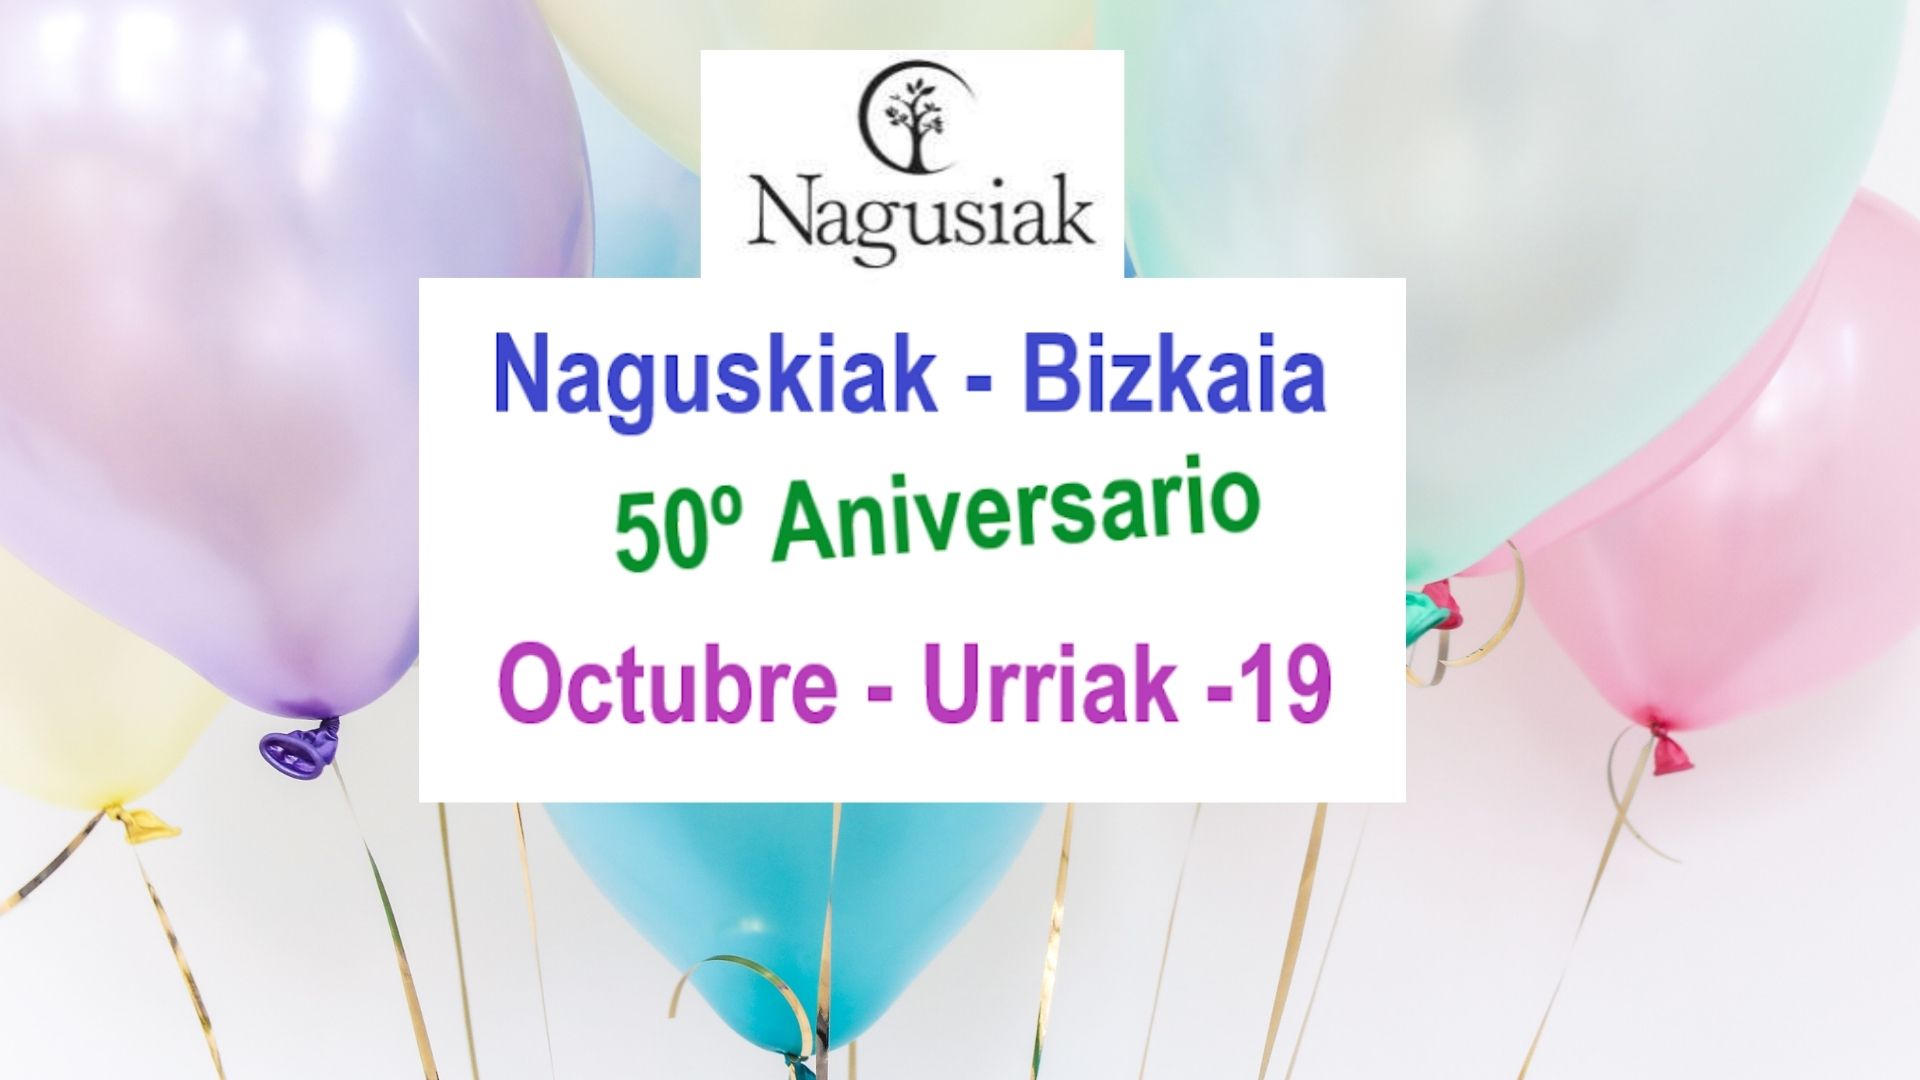 Nagusiak - Bizkaia celebra este año 2021 su 50º aniversario